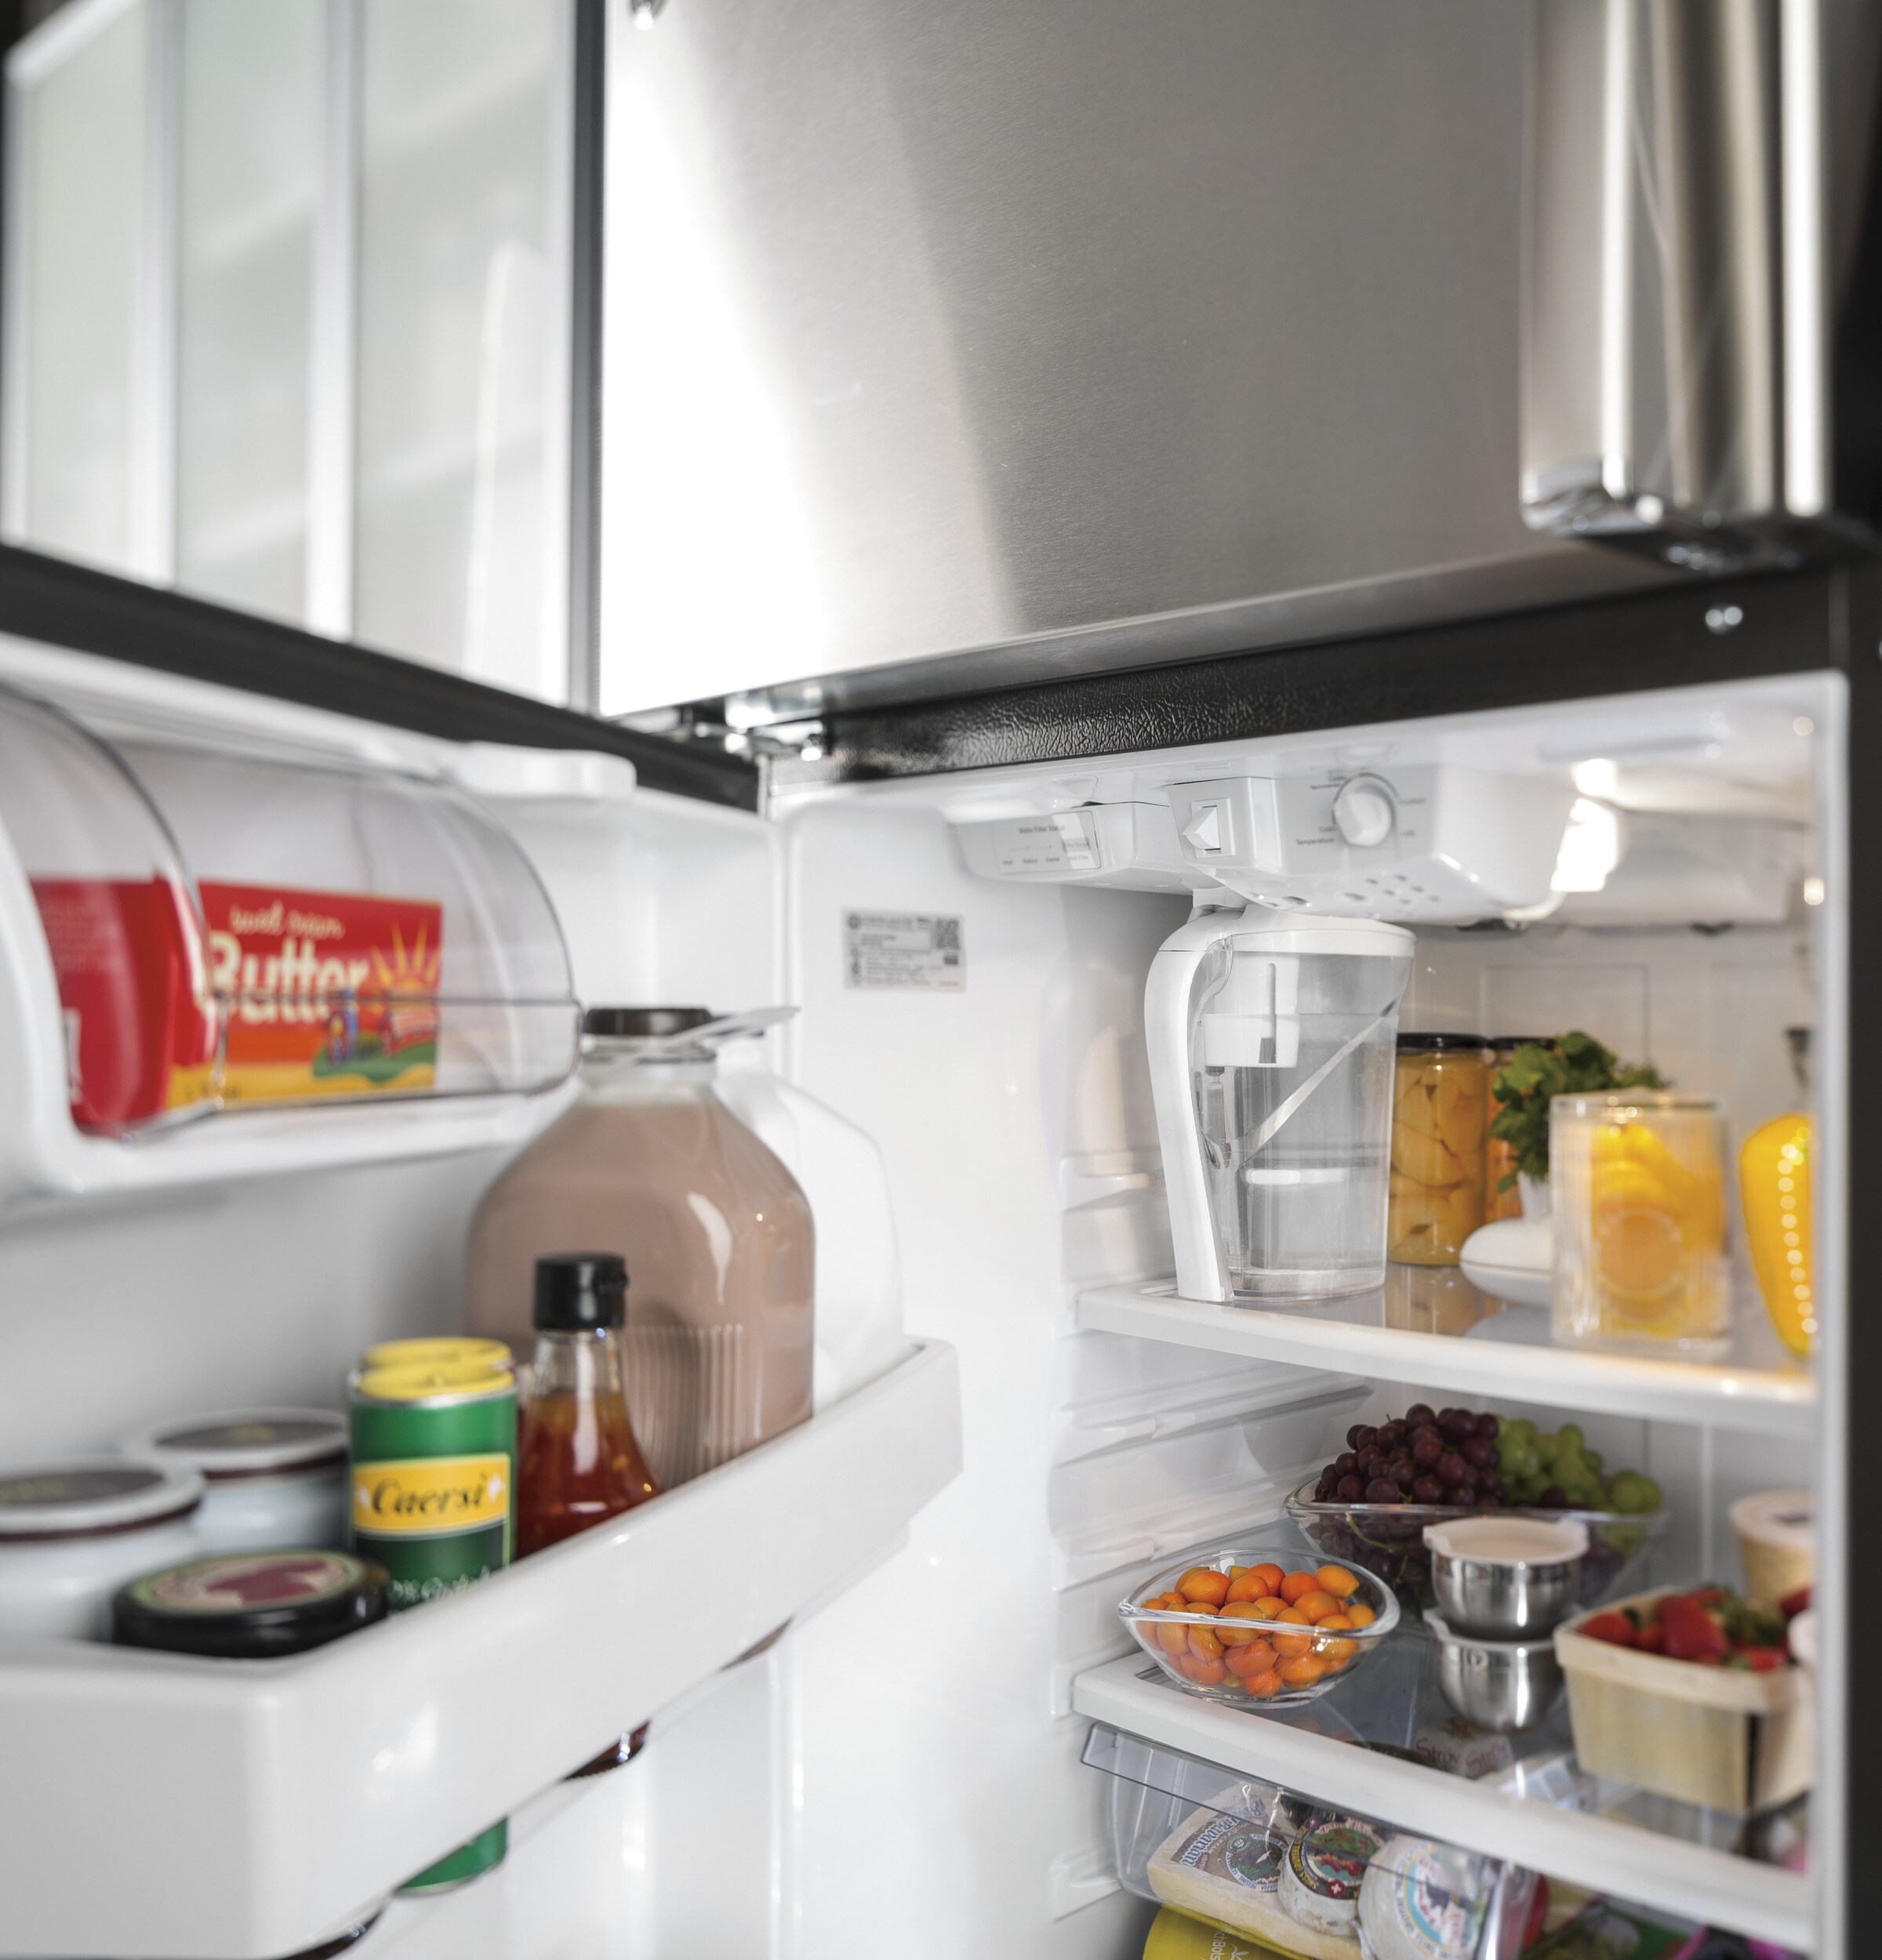 GE GAS18PSJSS Top Freezer Refrigerator with Autofill Pitcher